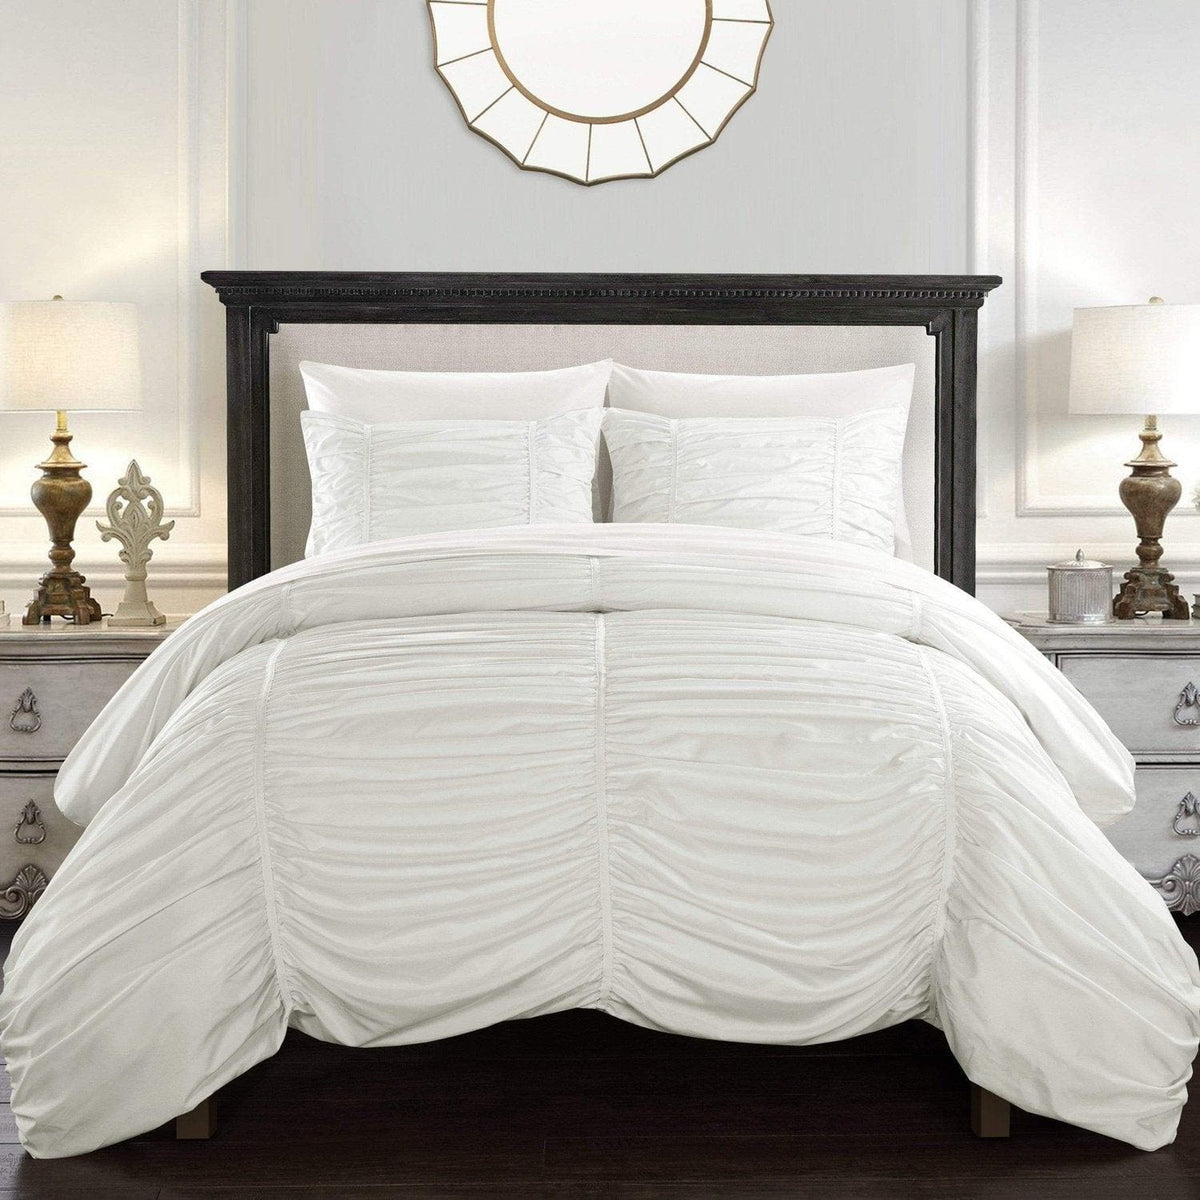 Chic Home Kaiah 3 Piece Striped Comforter Set White